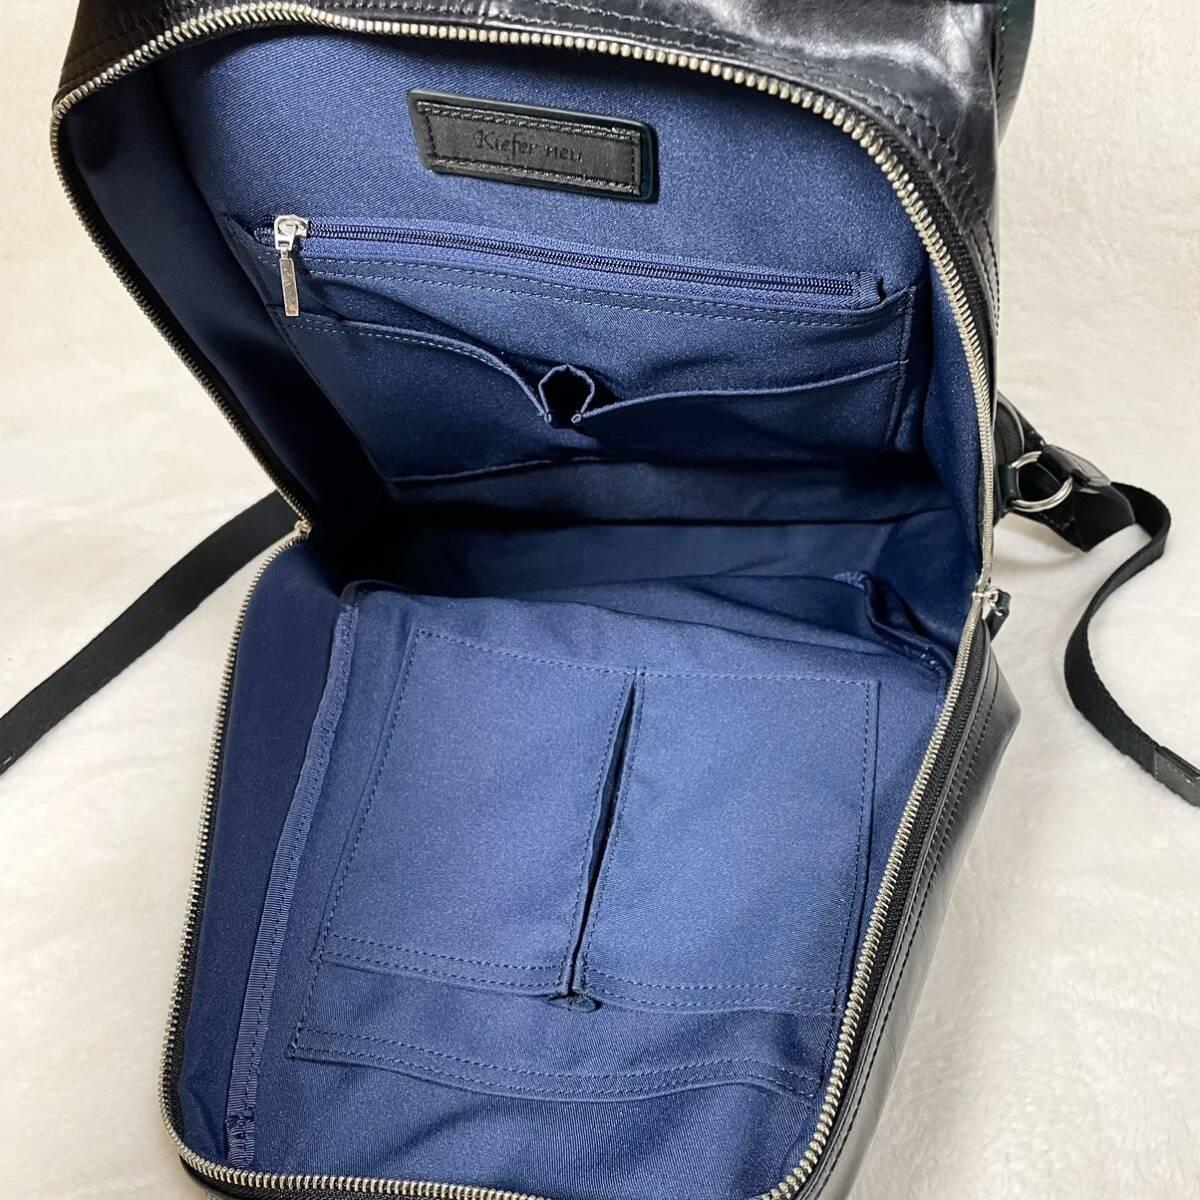 [ beautiful goods rare ] Kiefer neu key fur noi rucksack backpack leather original leather multifunction A4 possible black business men's document many storage 